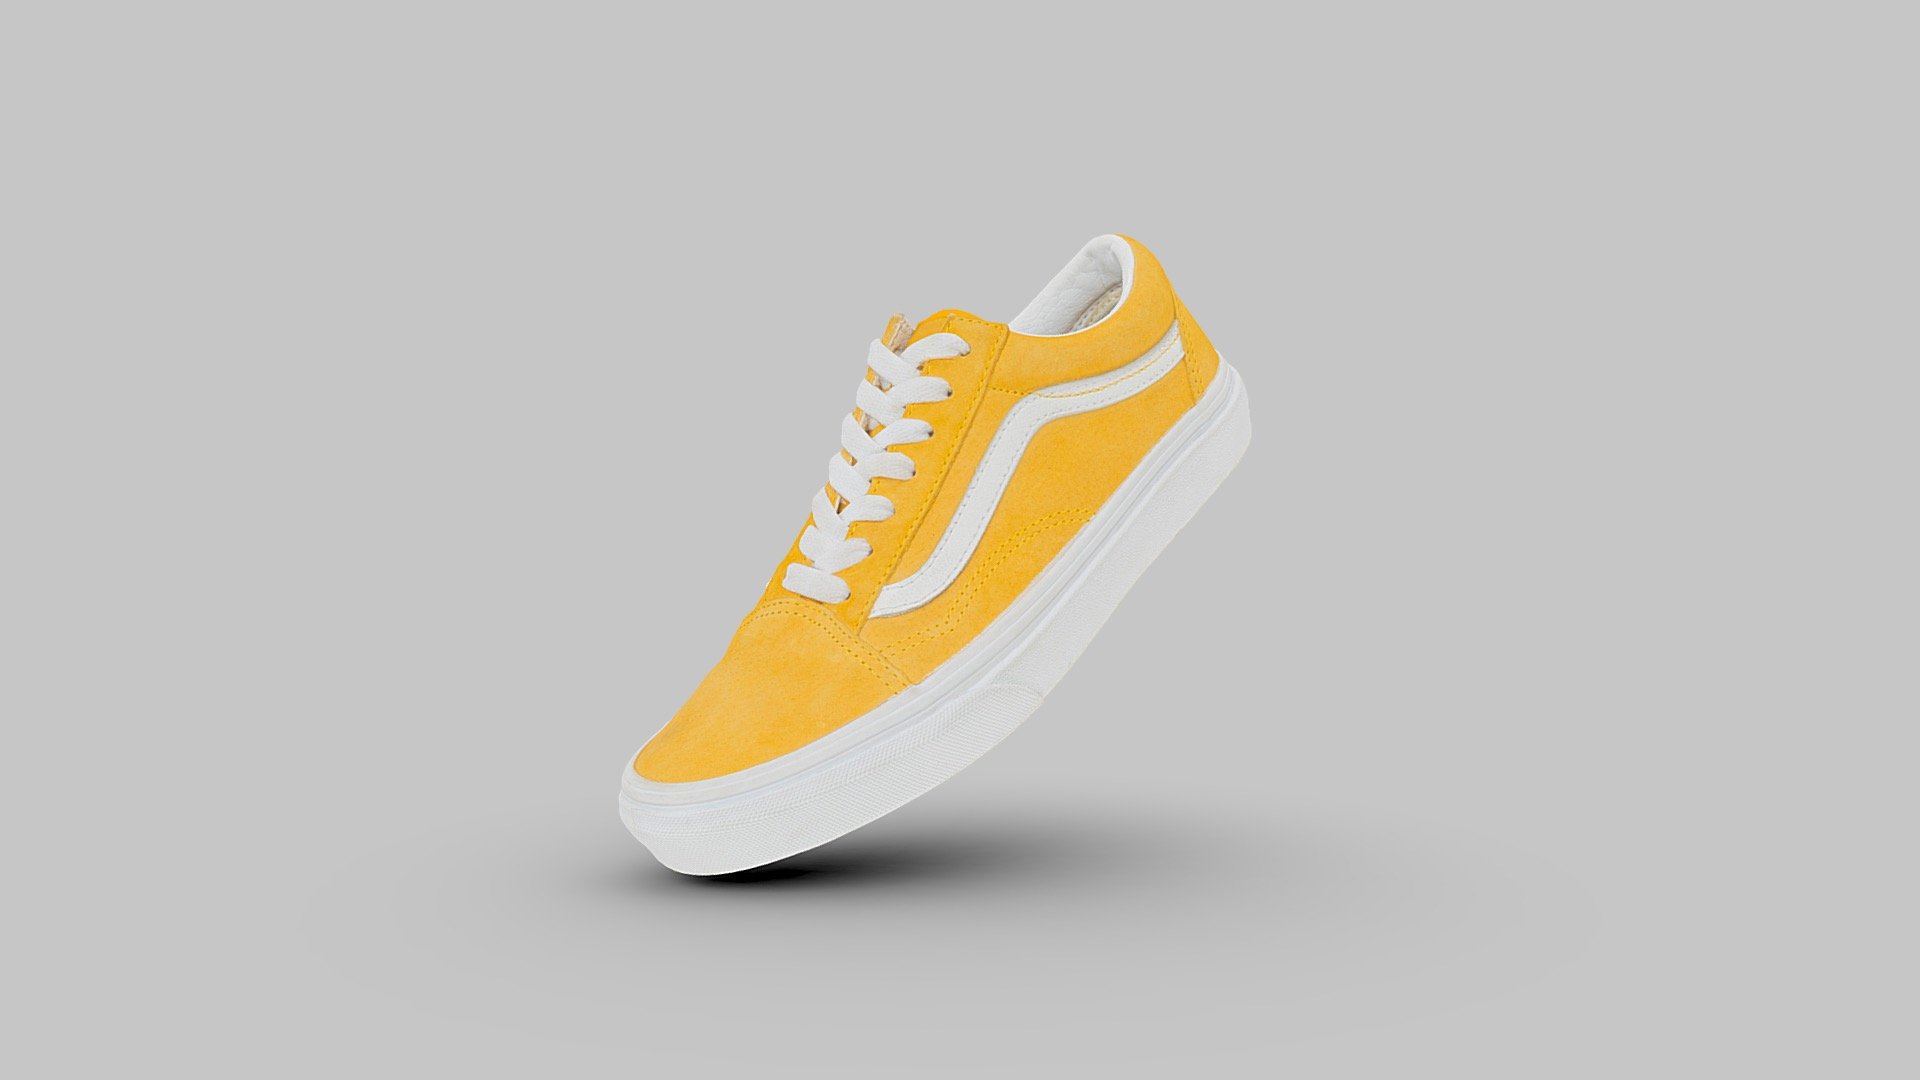 Photogrammetric 3D scan of VANS Old Skool Golden Yellow shoe.

https://metaworks.hu/ - VANS Old Skool Golden Yellow 3D | MetaWorks - 3D model by metaworks.hu 3d model